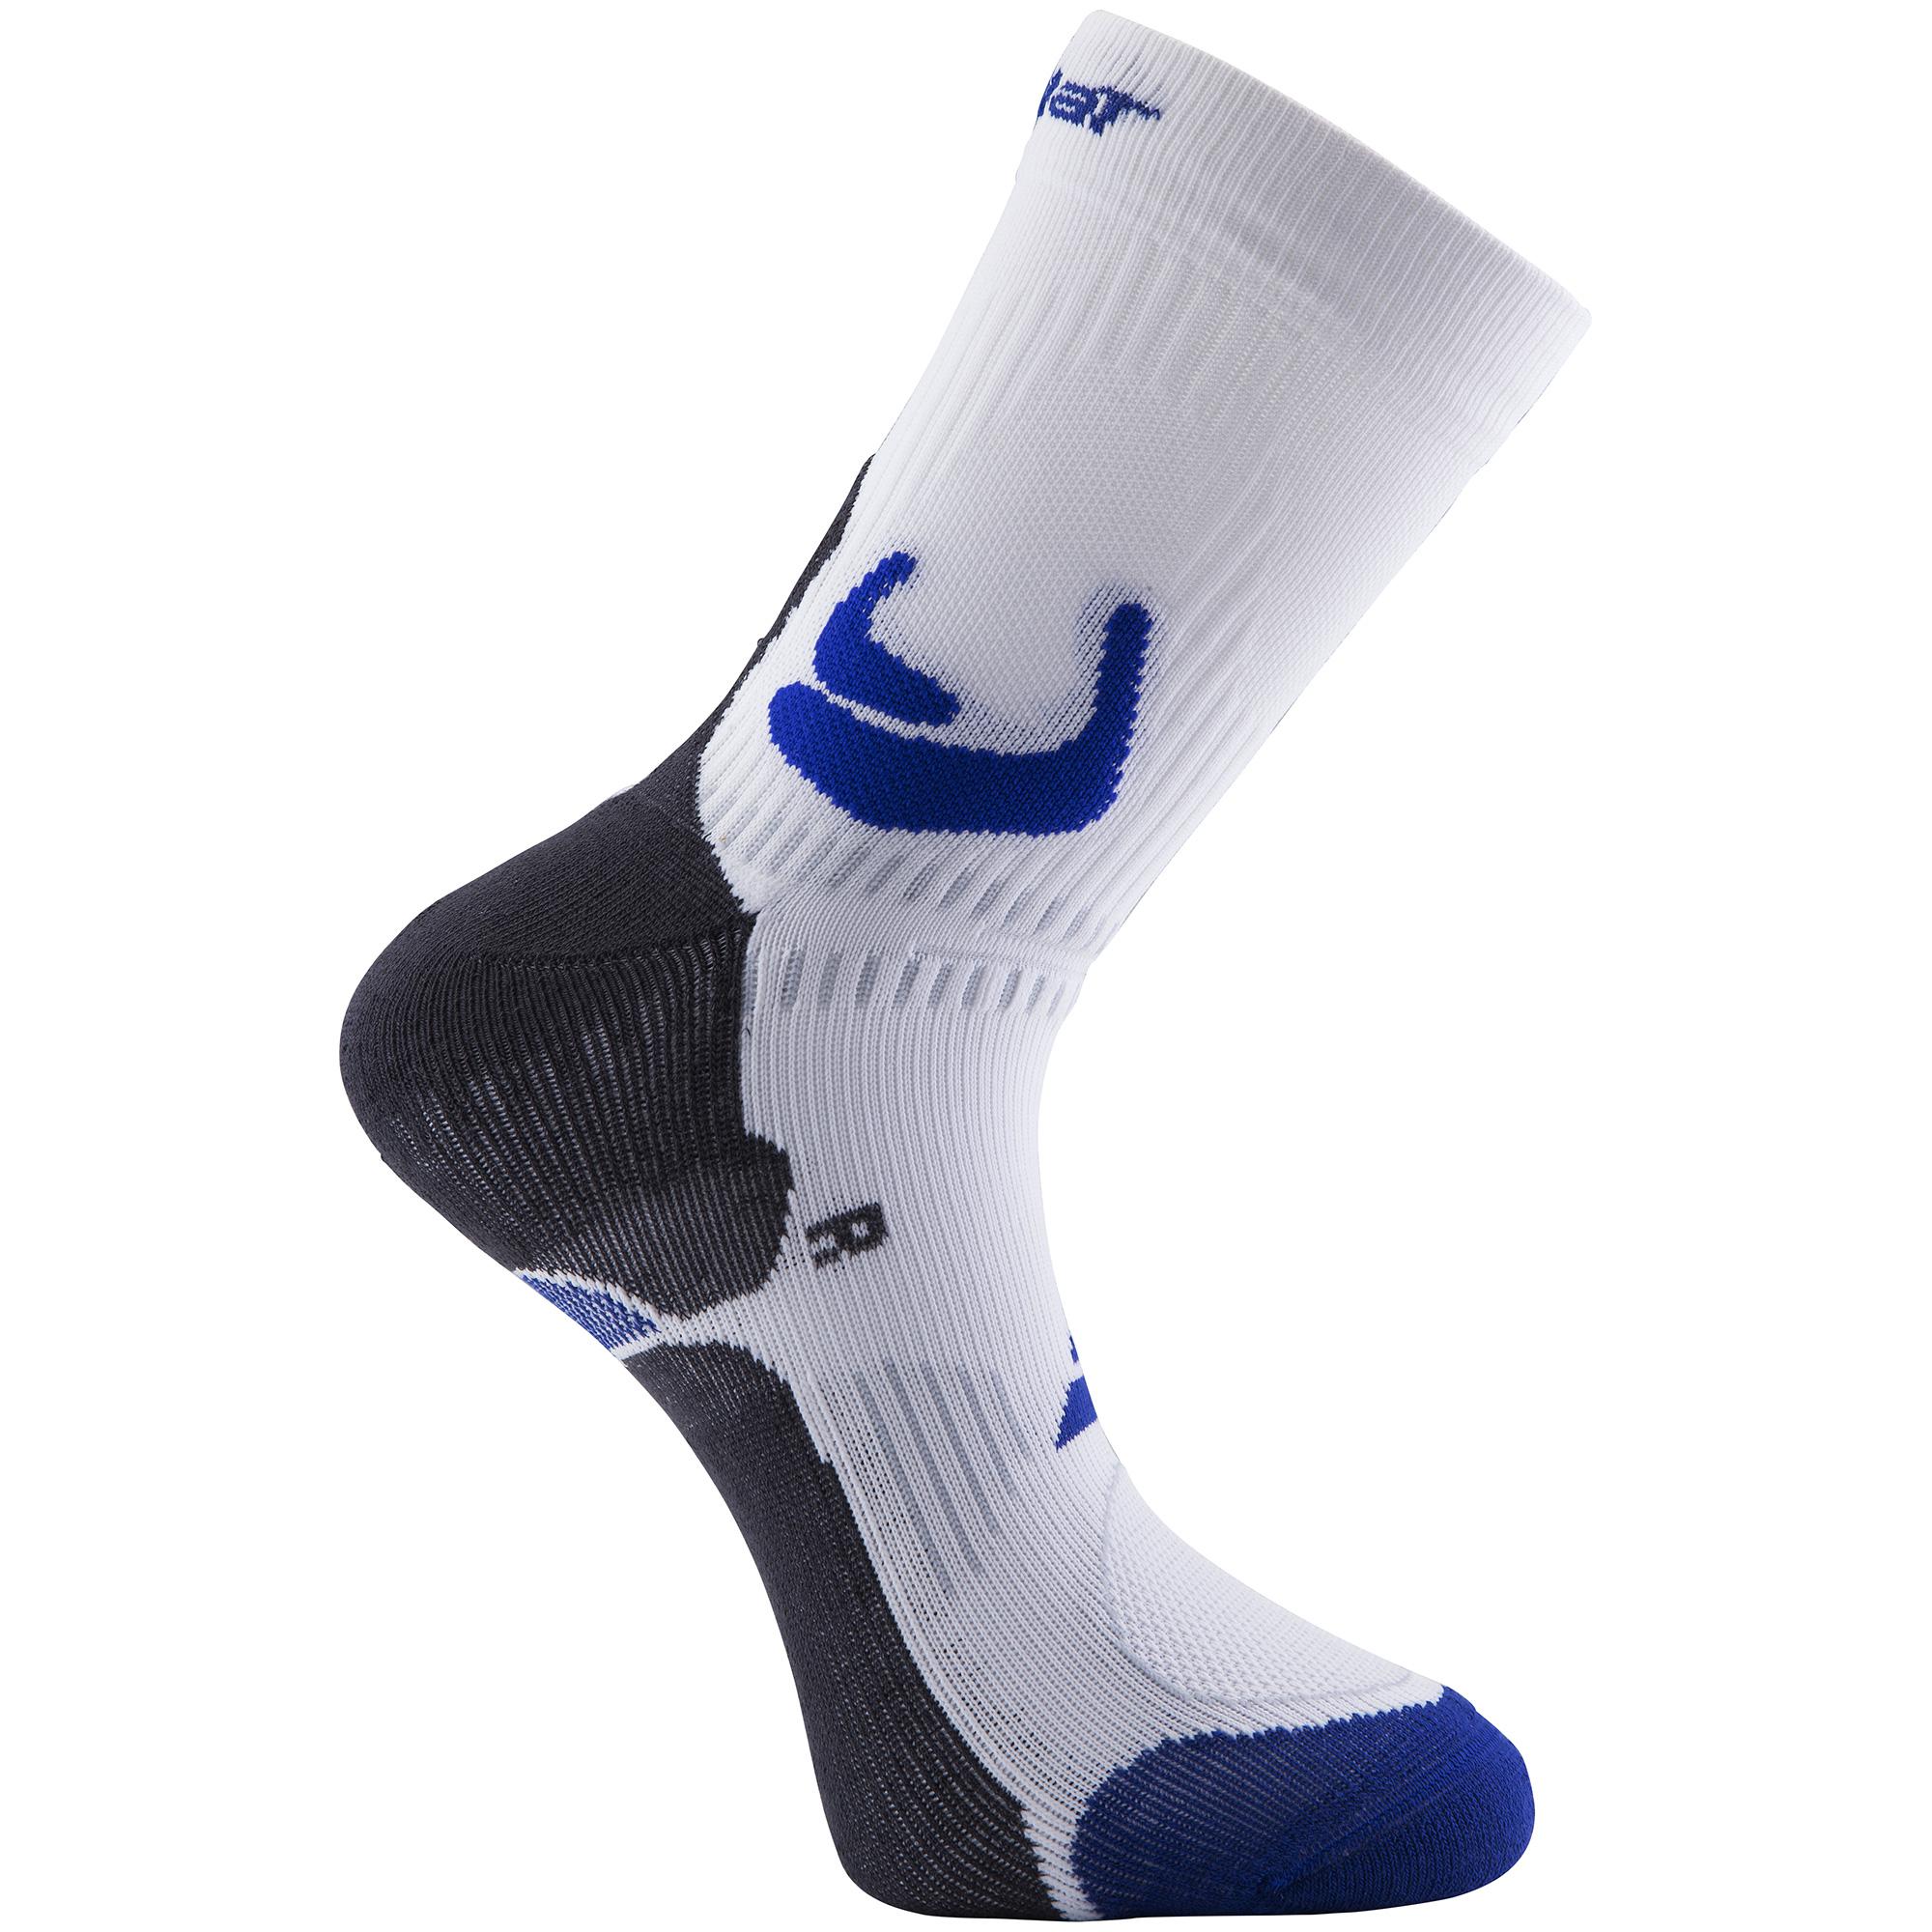 Babolat Pro 360 Socks 1 Pair Pack - Dazzling Blue - Tennisnuts.com